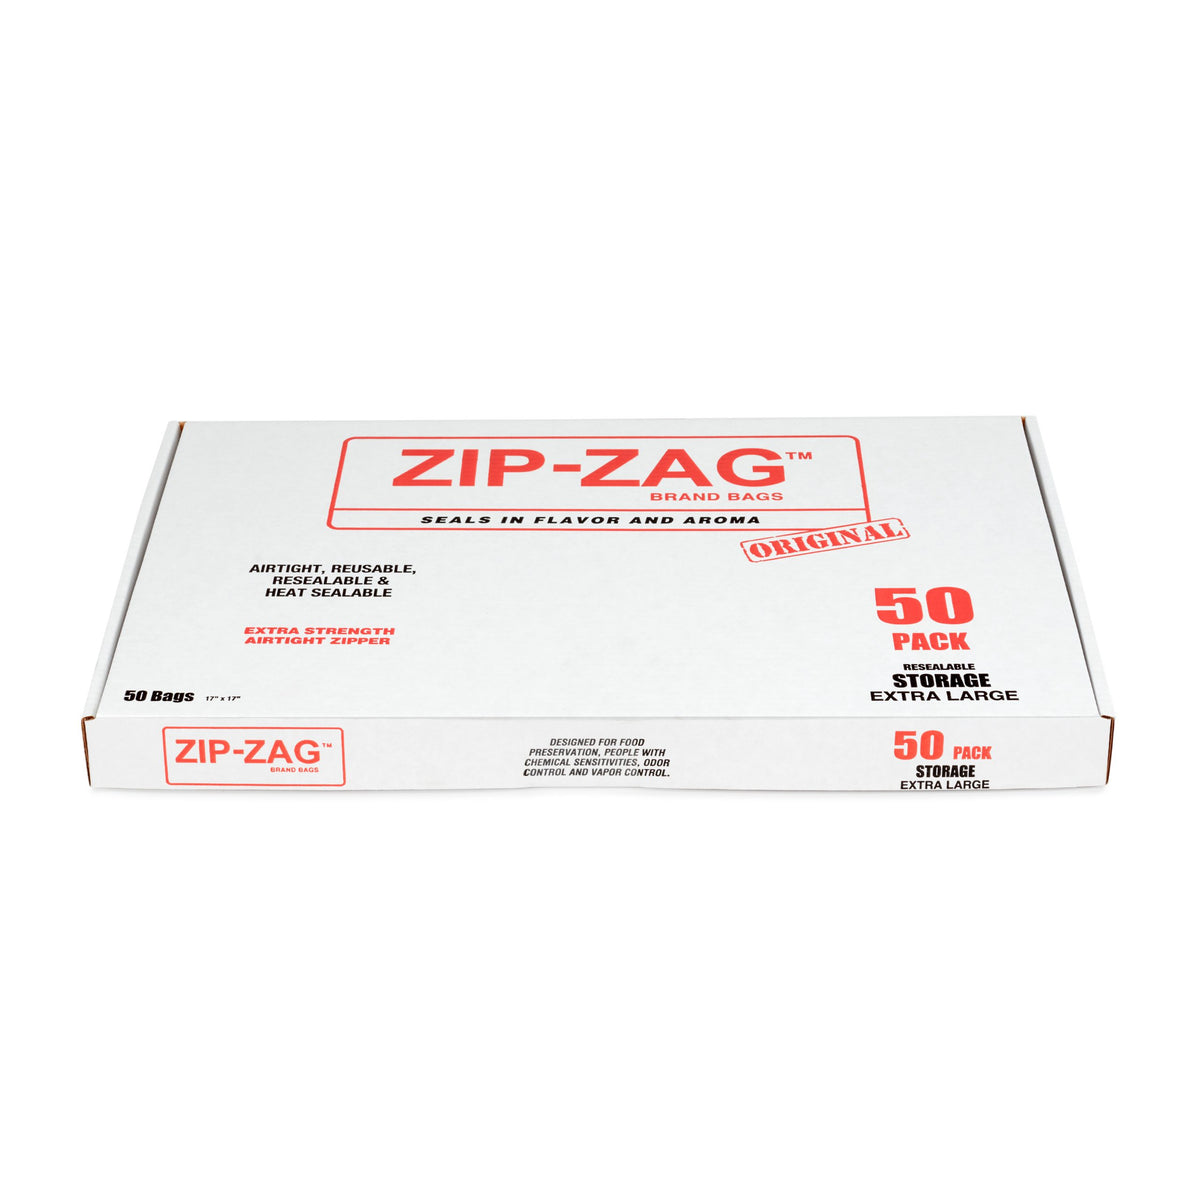 Zip Zag Bag XL Smell Proof Reusable Bag - 2 lb (50 pack)